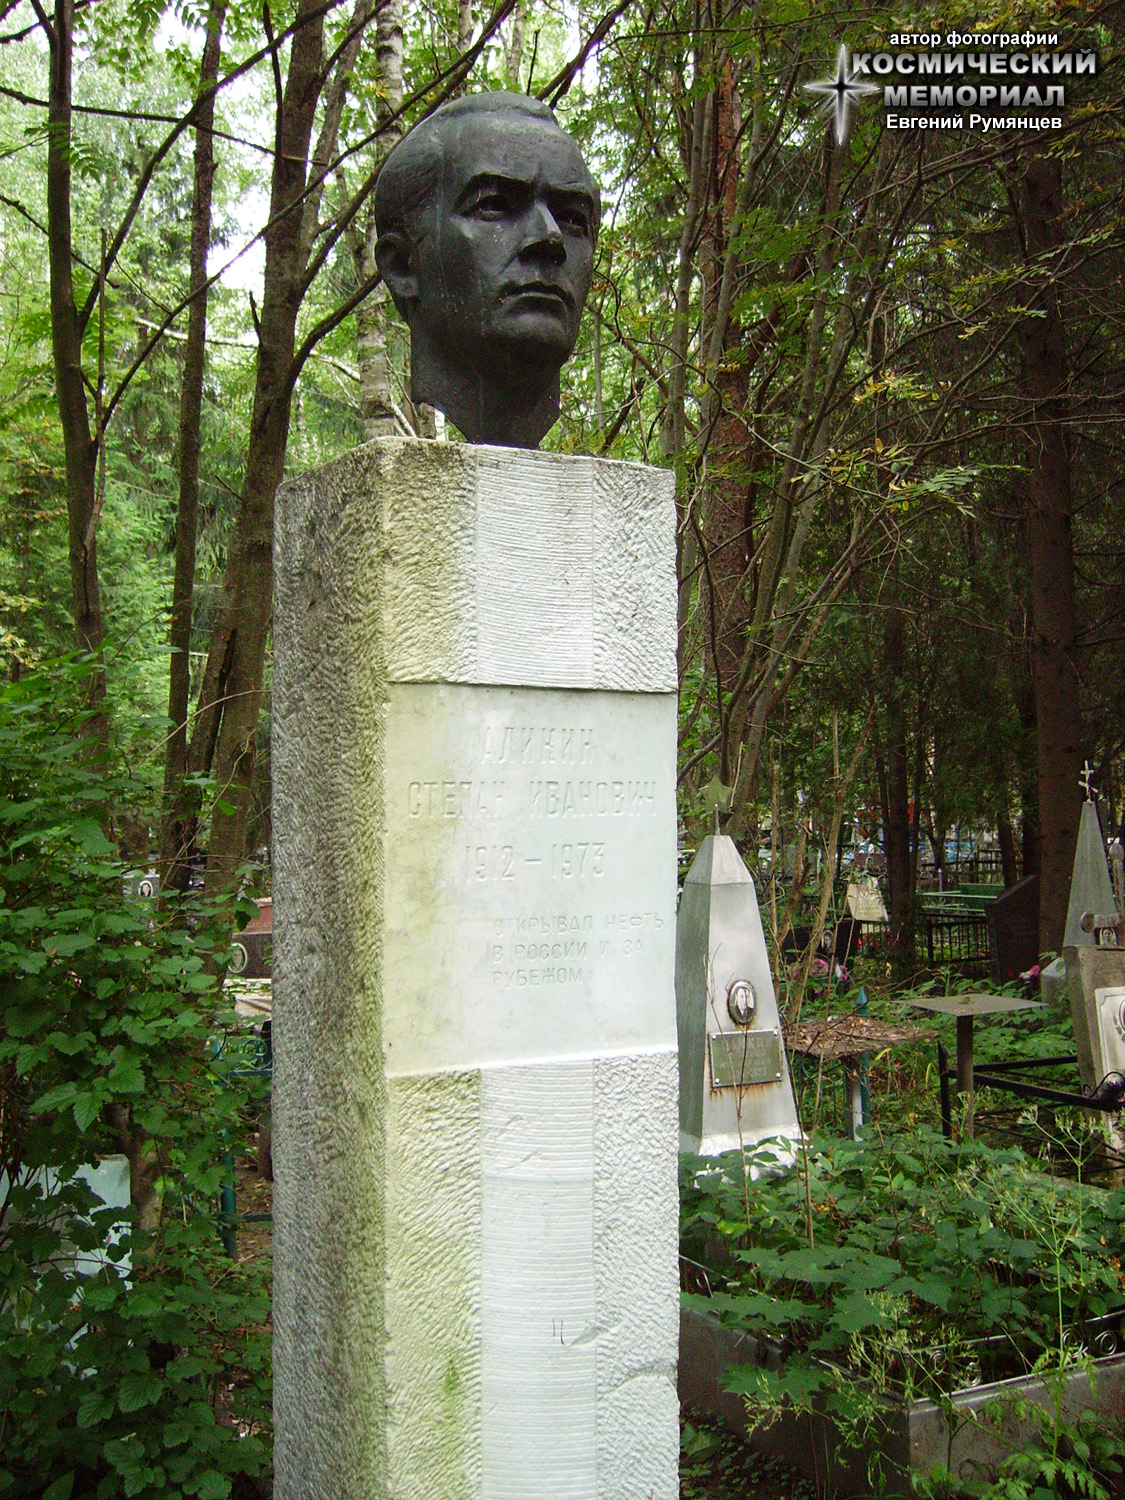 Надгробие на могиле Аликина Степана Ивановича - нефтяника, автора метода "турбинного" бурения